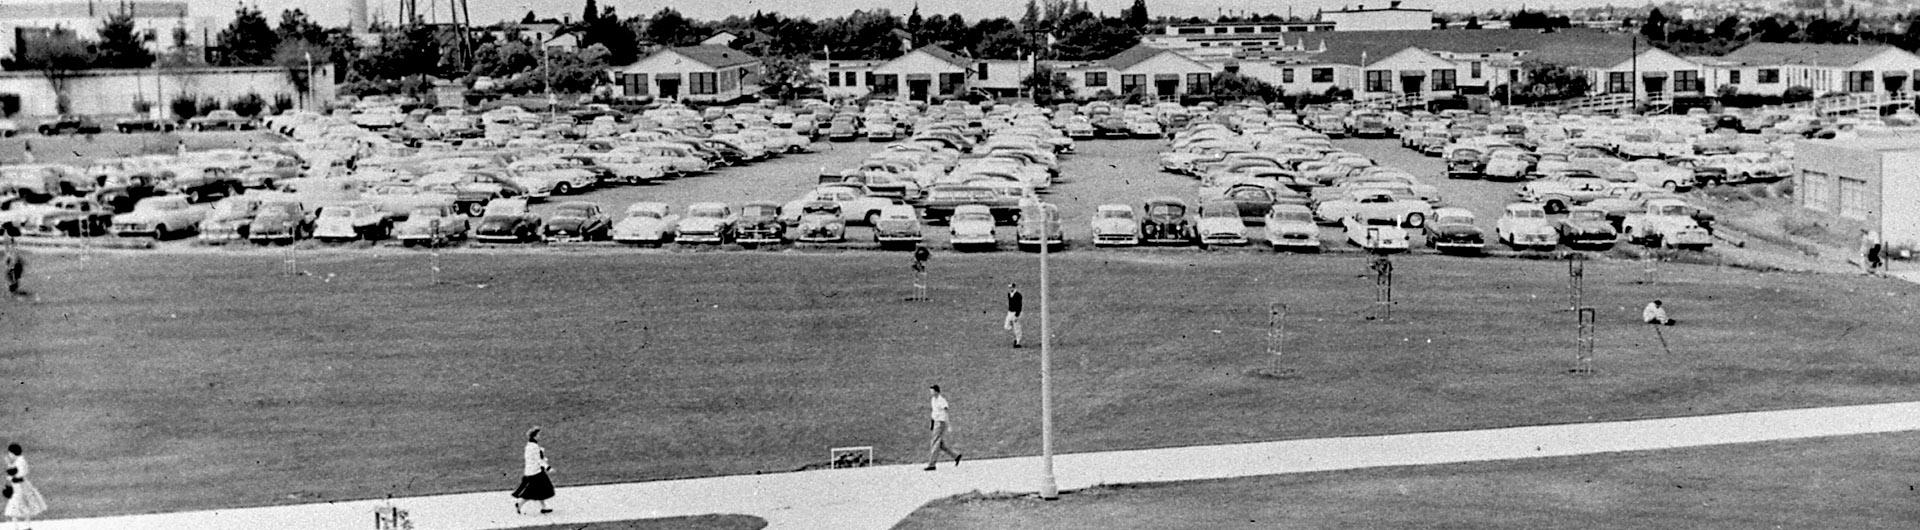 1950s image, campus parking lot